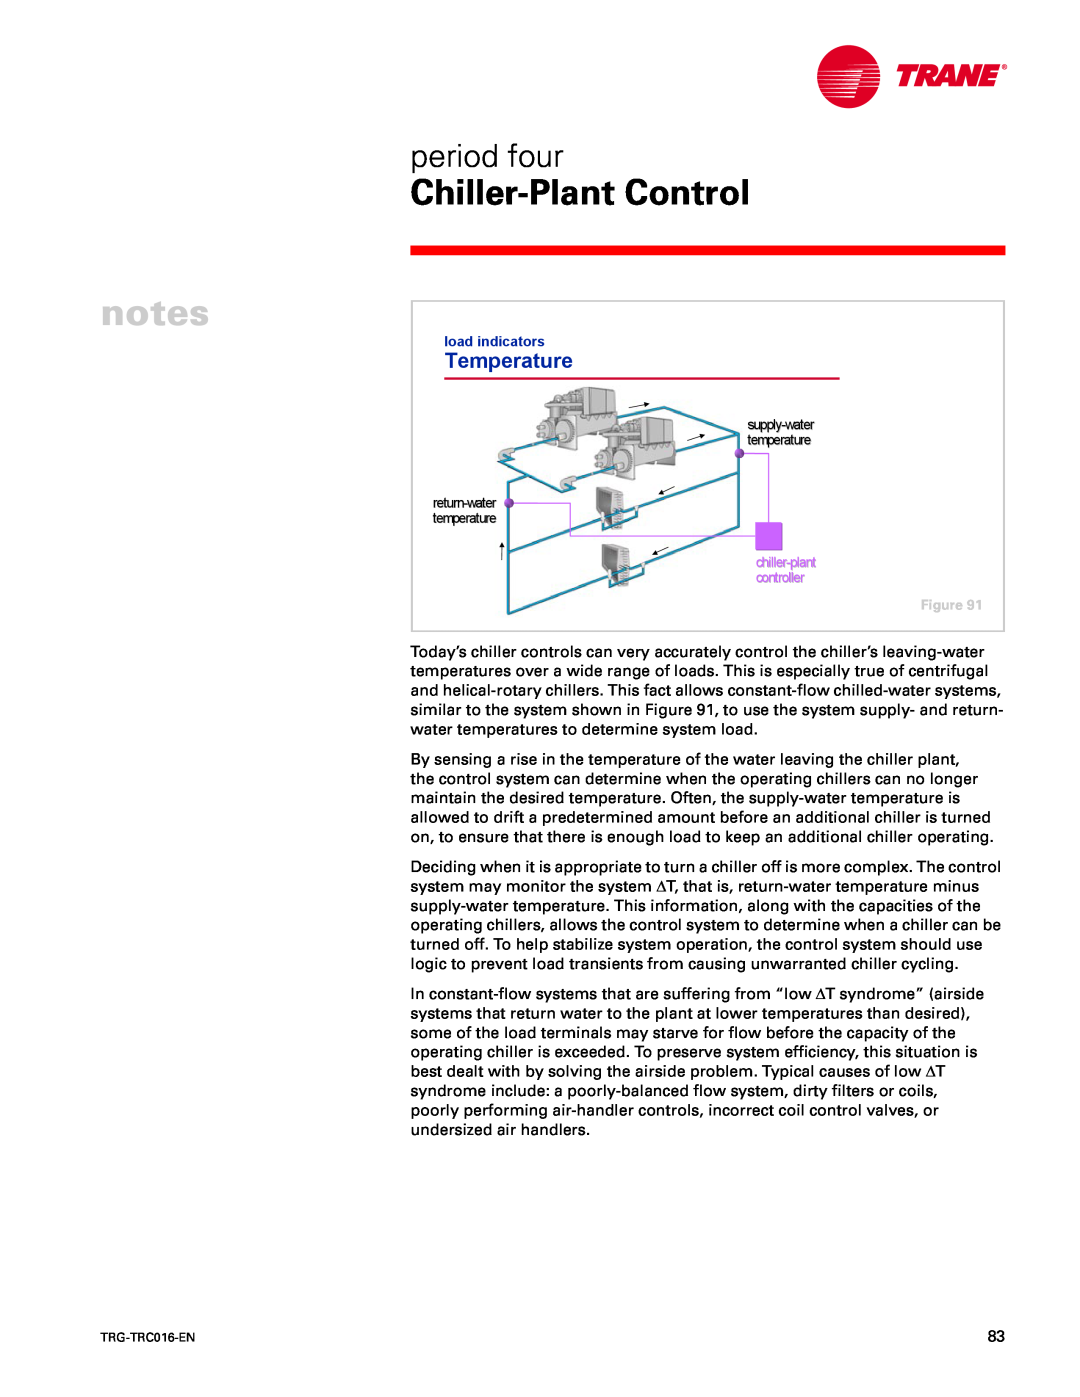 Trane TRG-TRC016-EN manual Temperature, notes, Chiller-PlantControl, period four 